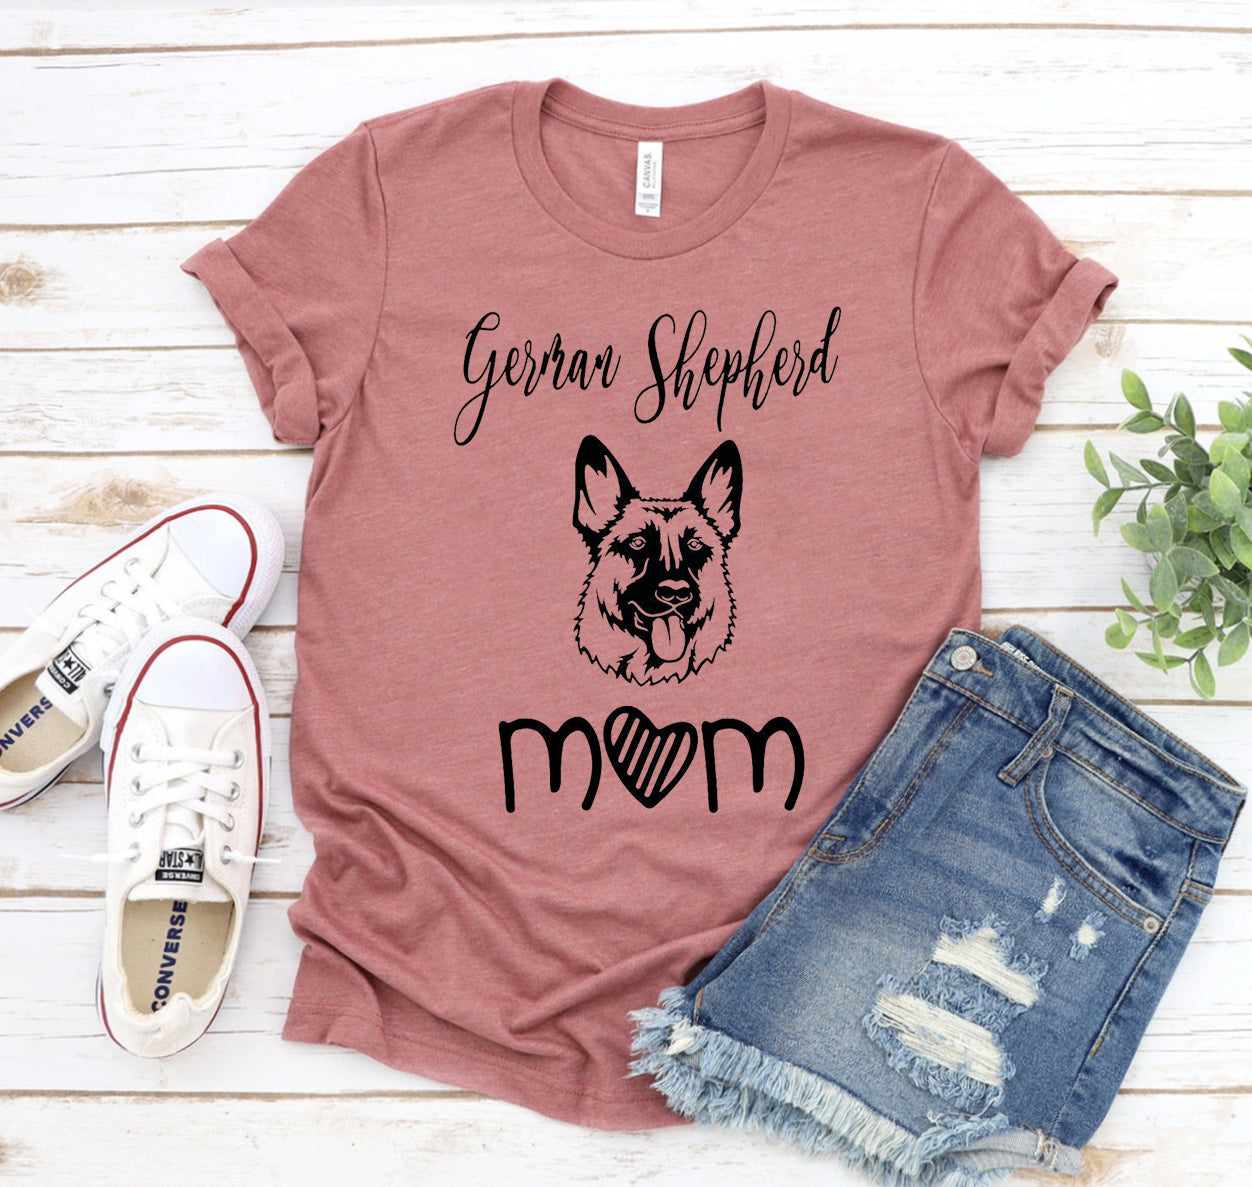 German Shepherd Mom T-shirt